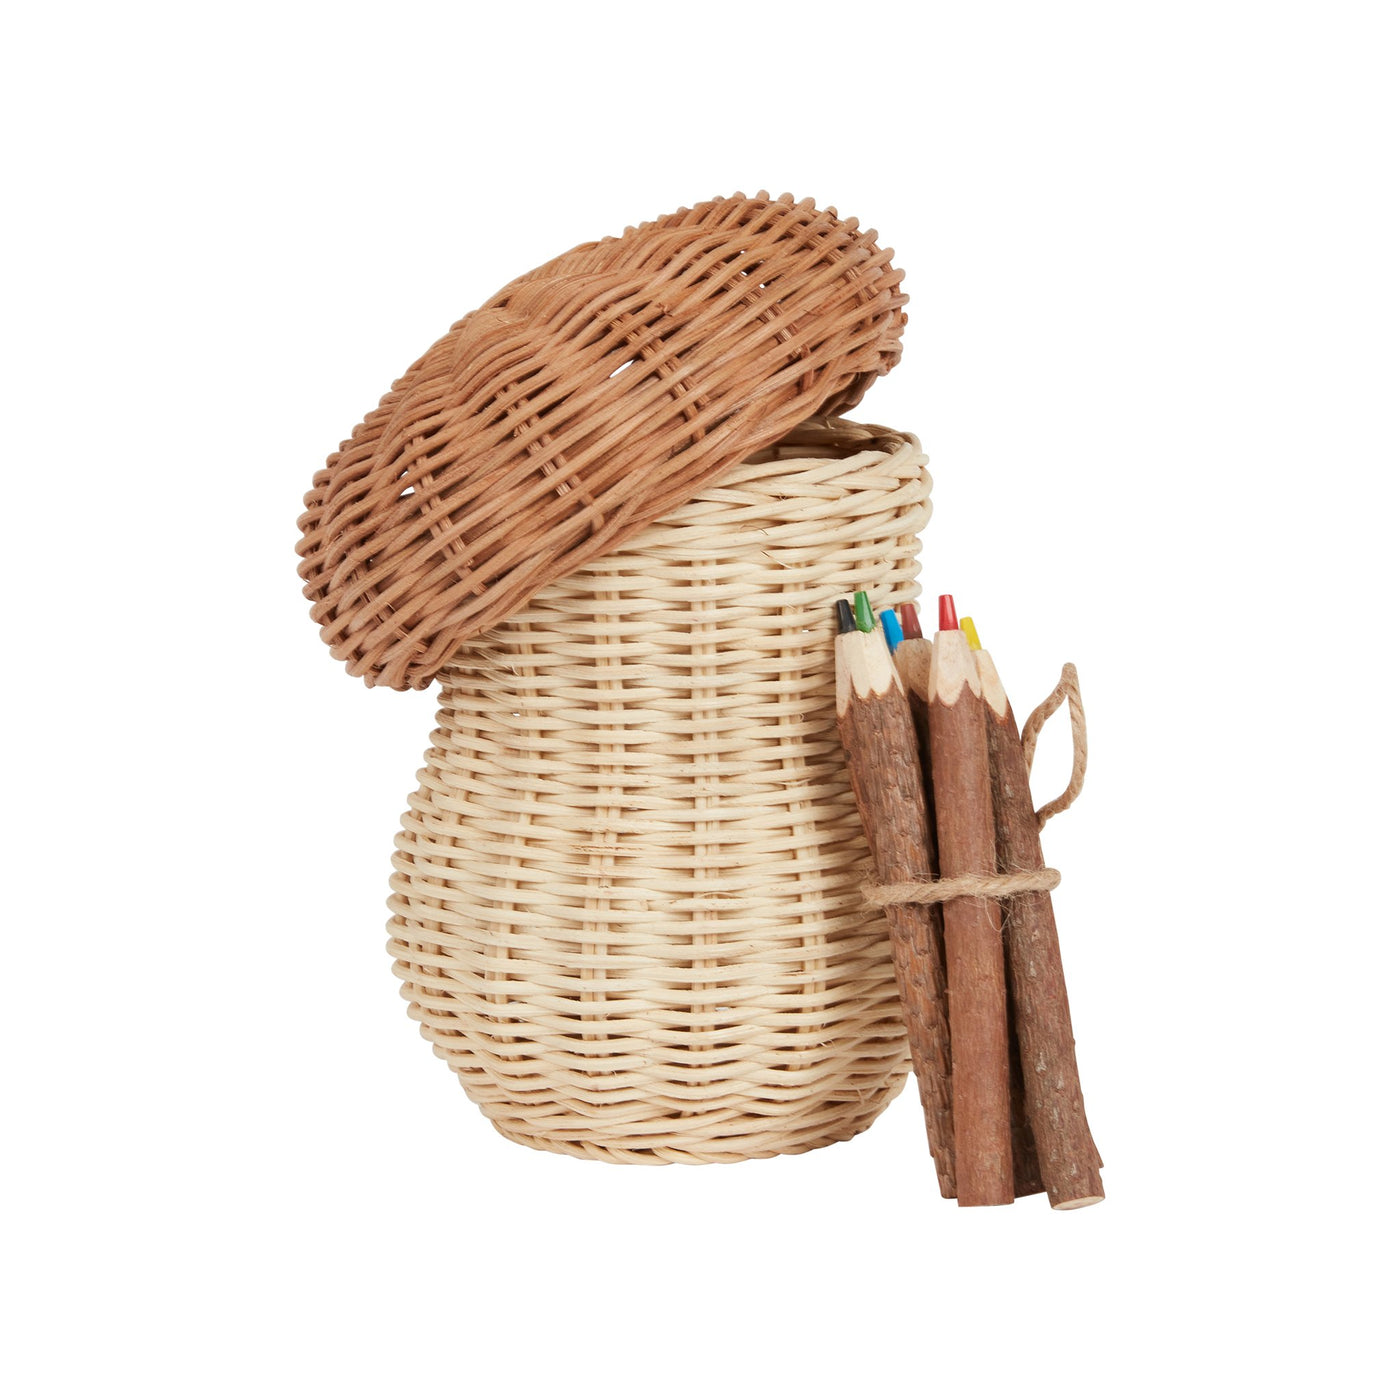 Olli Ella Porcini Mushroom Basket with Twig Pencils